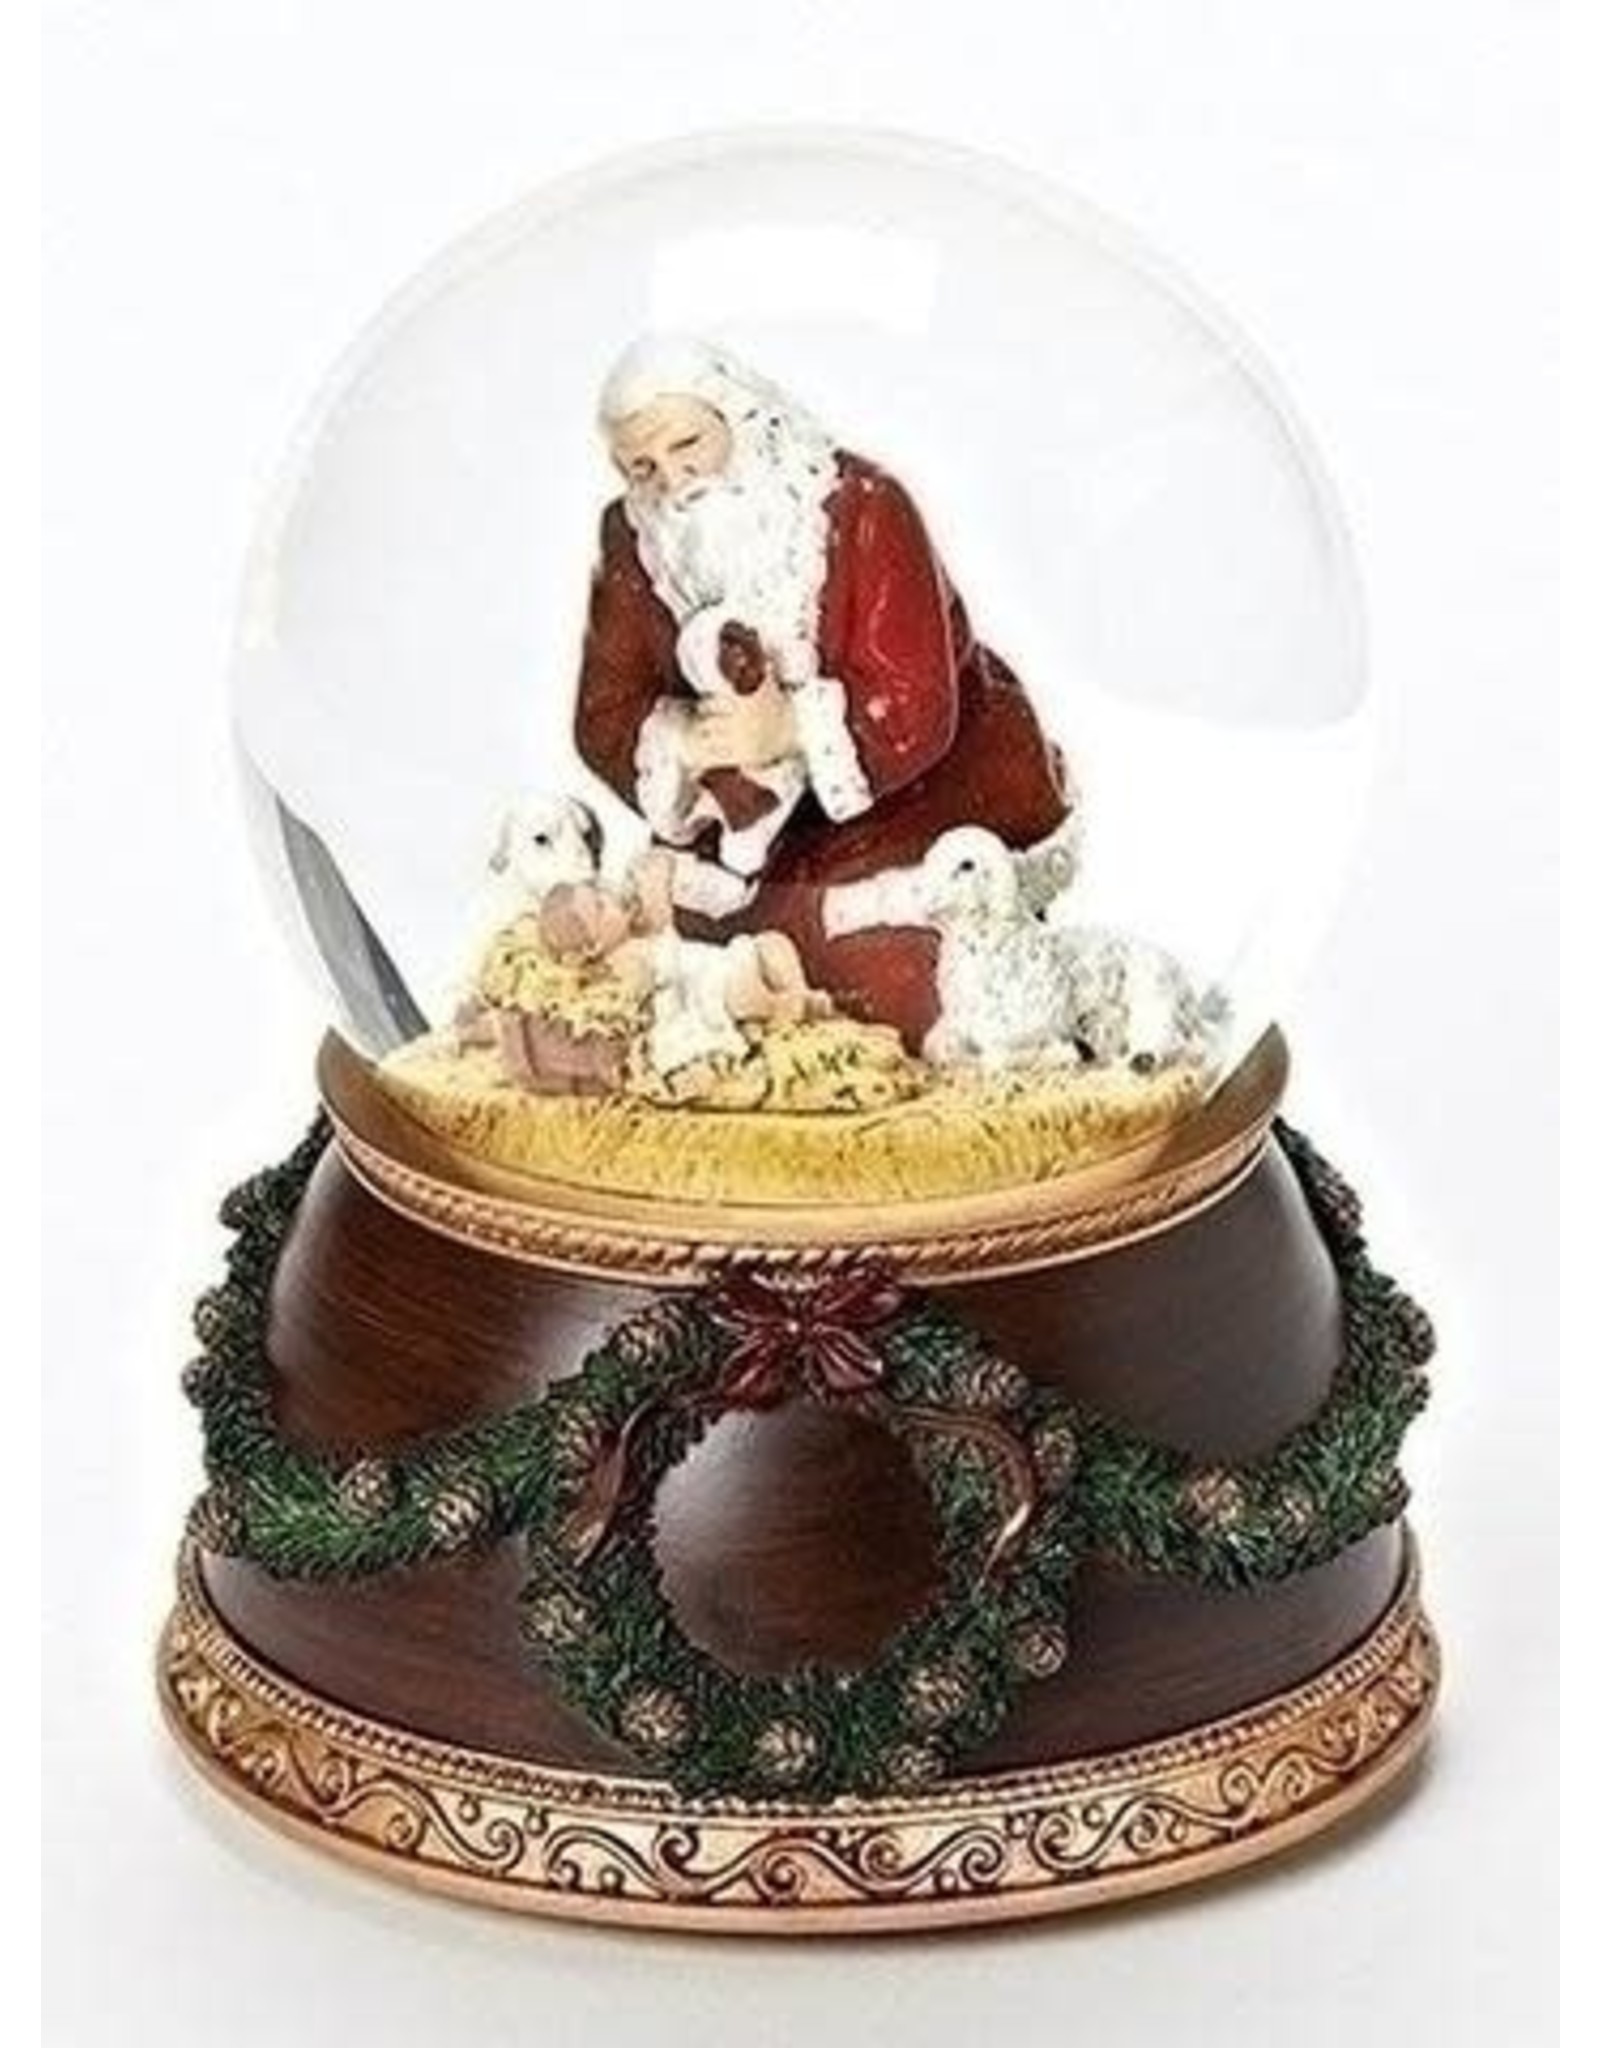 Roman Kneeling Santa Silent Night 6 x 4 inch Christmas Water Globe Decoration